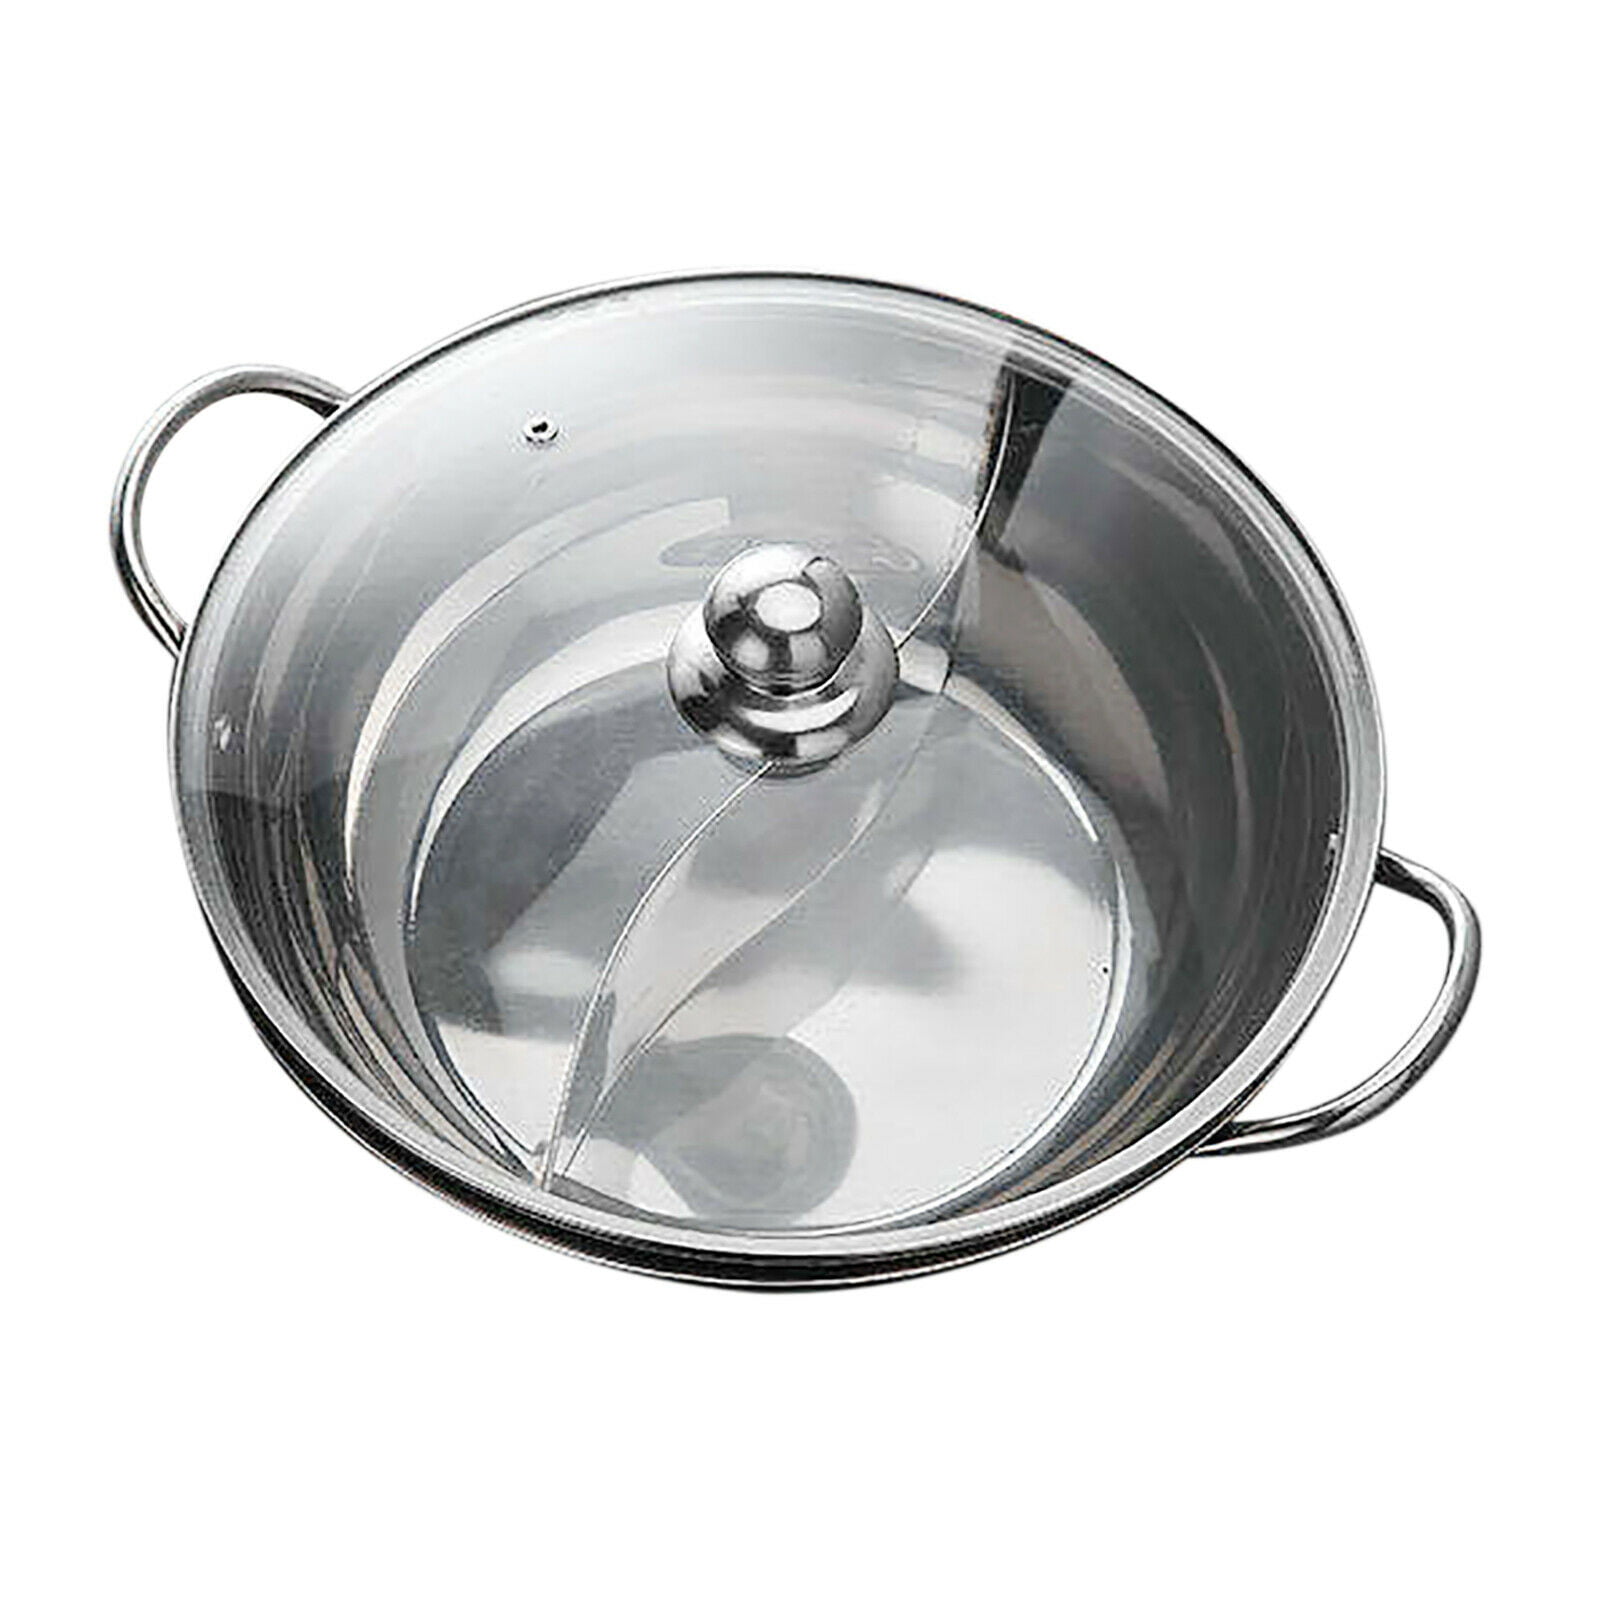 Stainless Steel Twin Divided Pot Double Hotpot Cooker Gas Stove Pot Home  Kitchen Cookware Cooking Mandarin Duck Pot